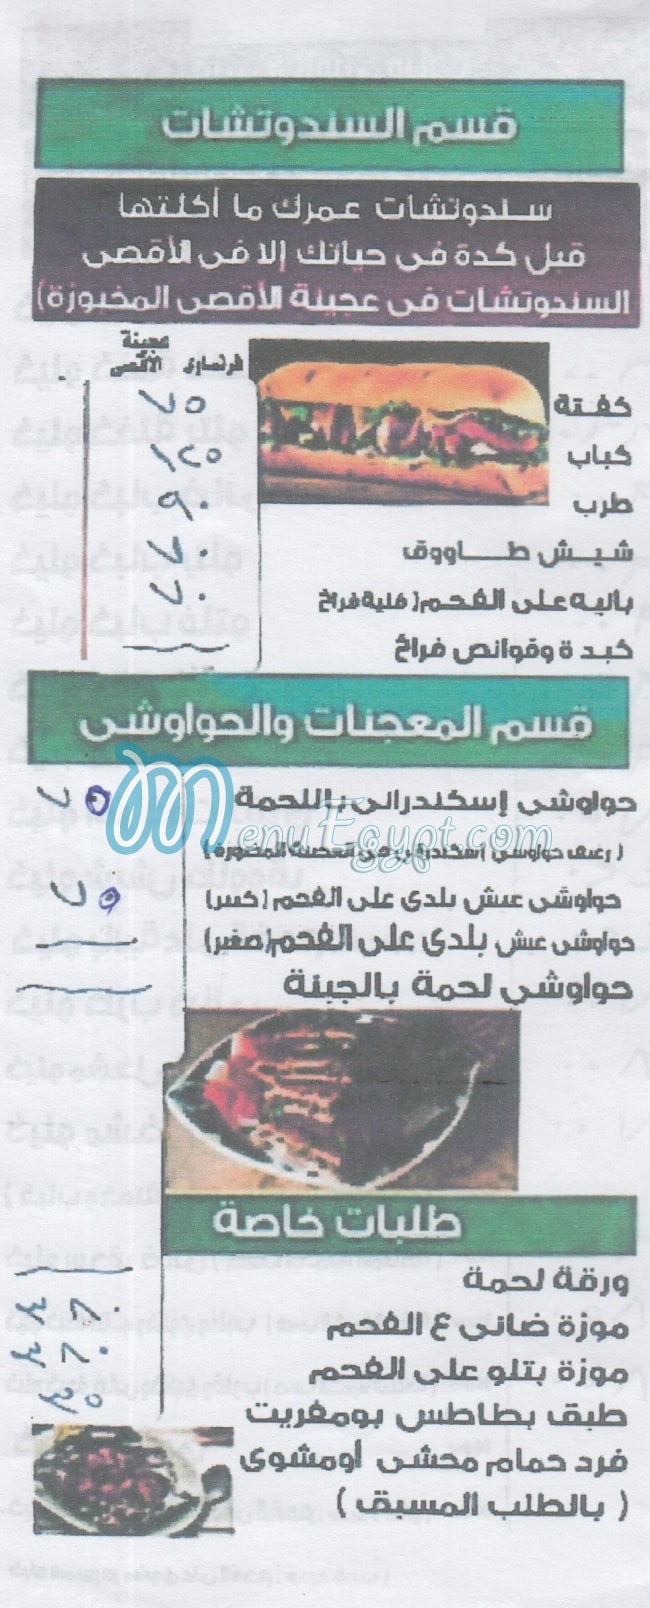 Mashweyat Al Aqsa El Shareef online menu